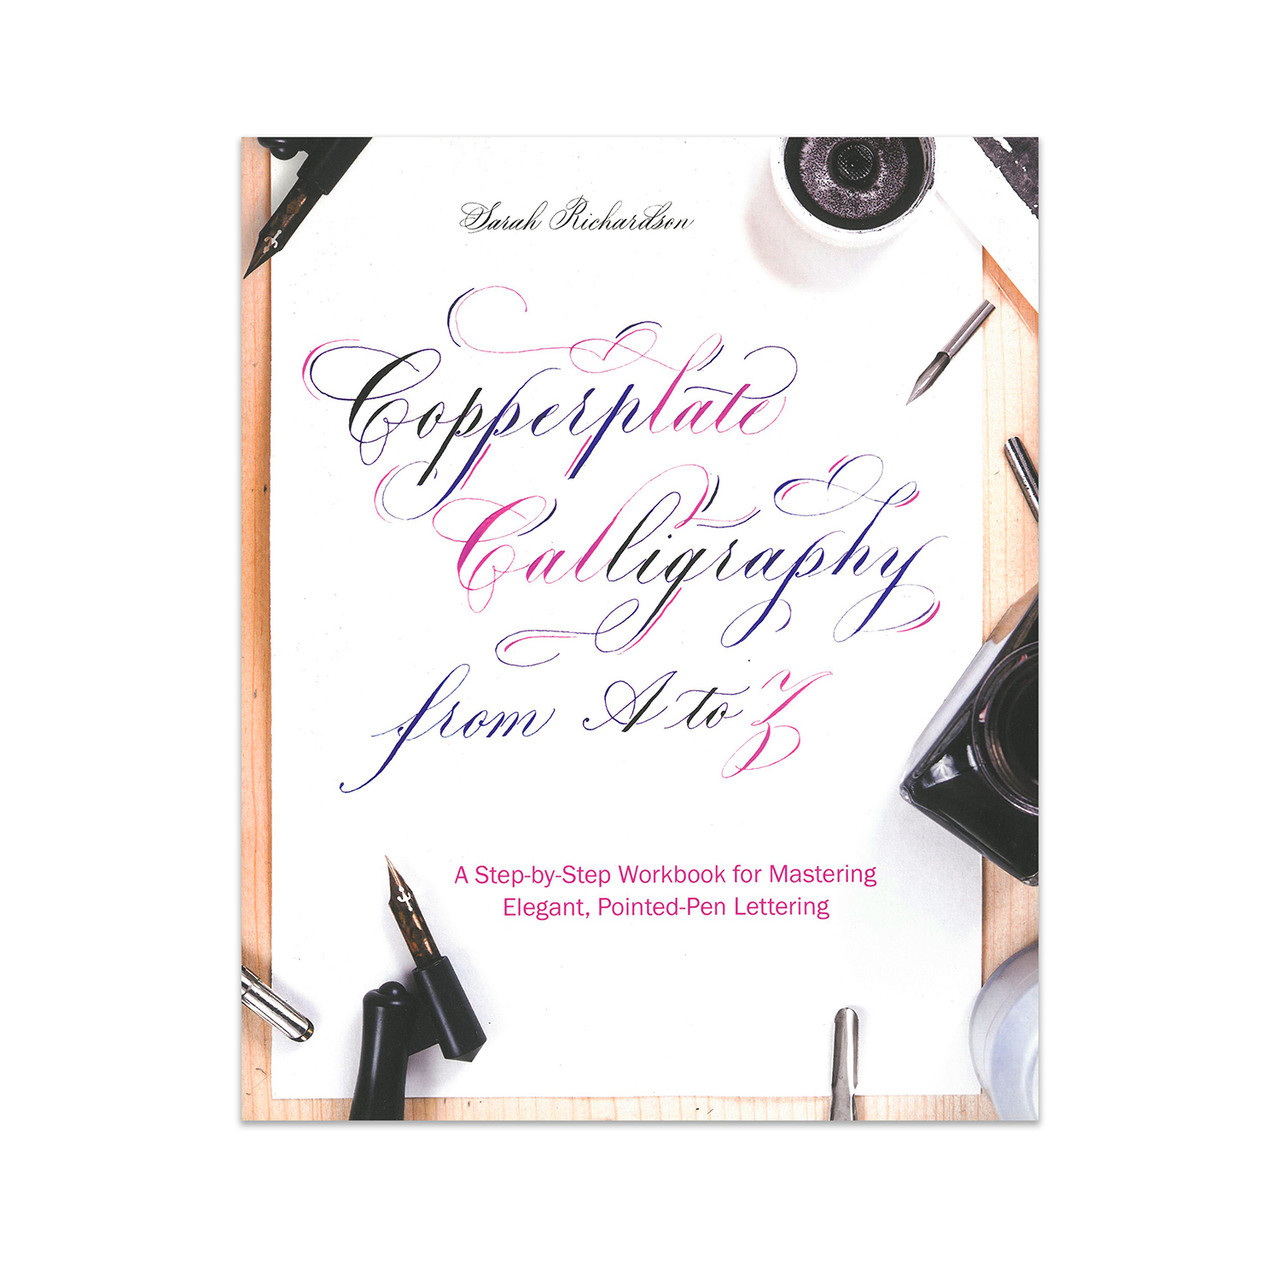 Logos Calligraphy Copperplate Pad - John Neal Books